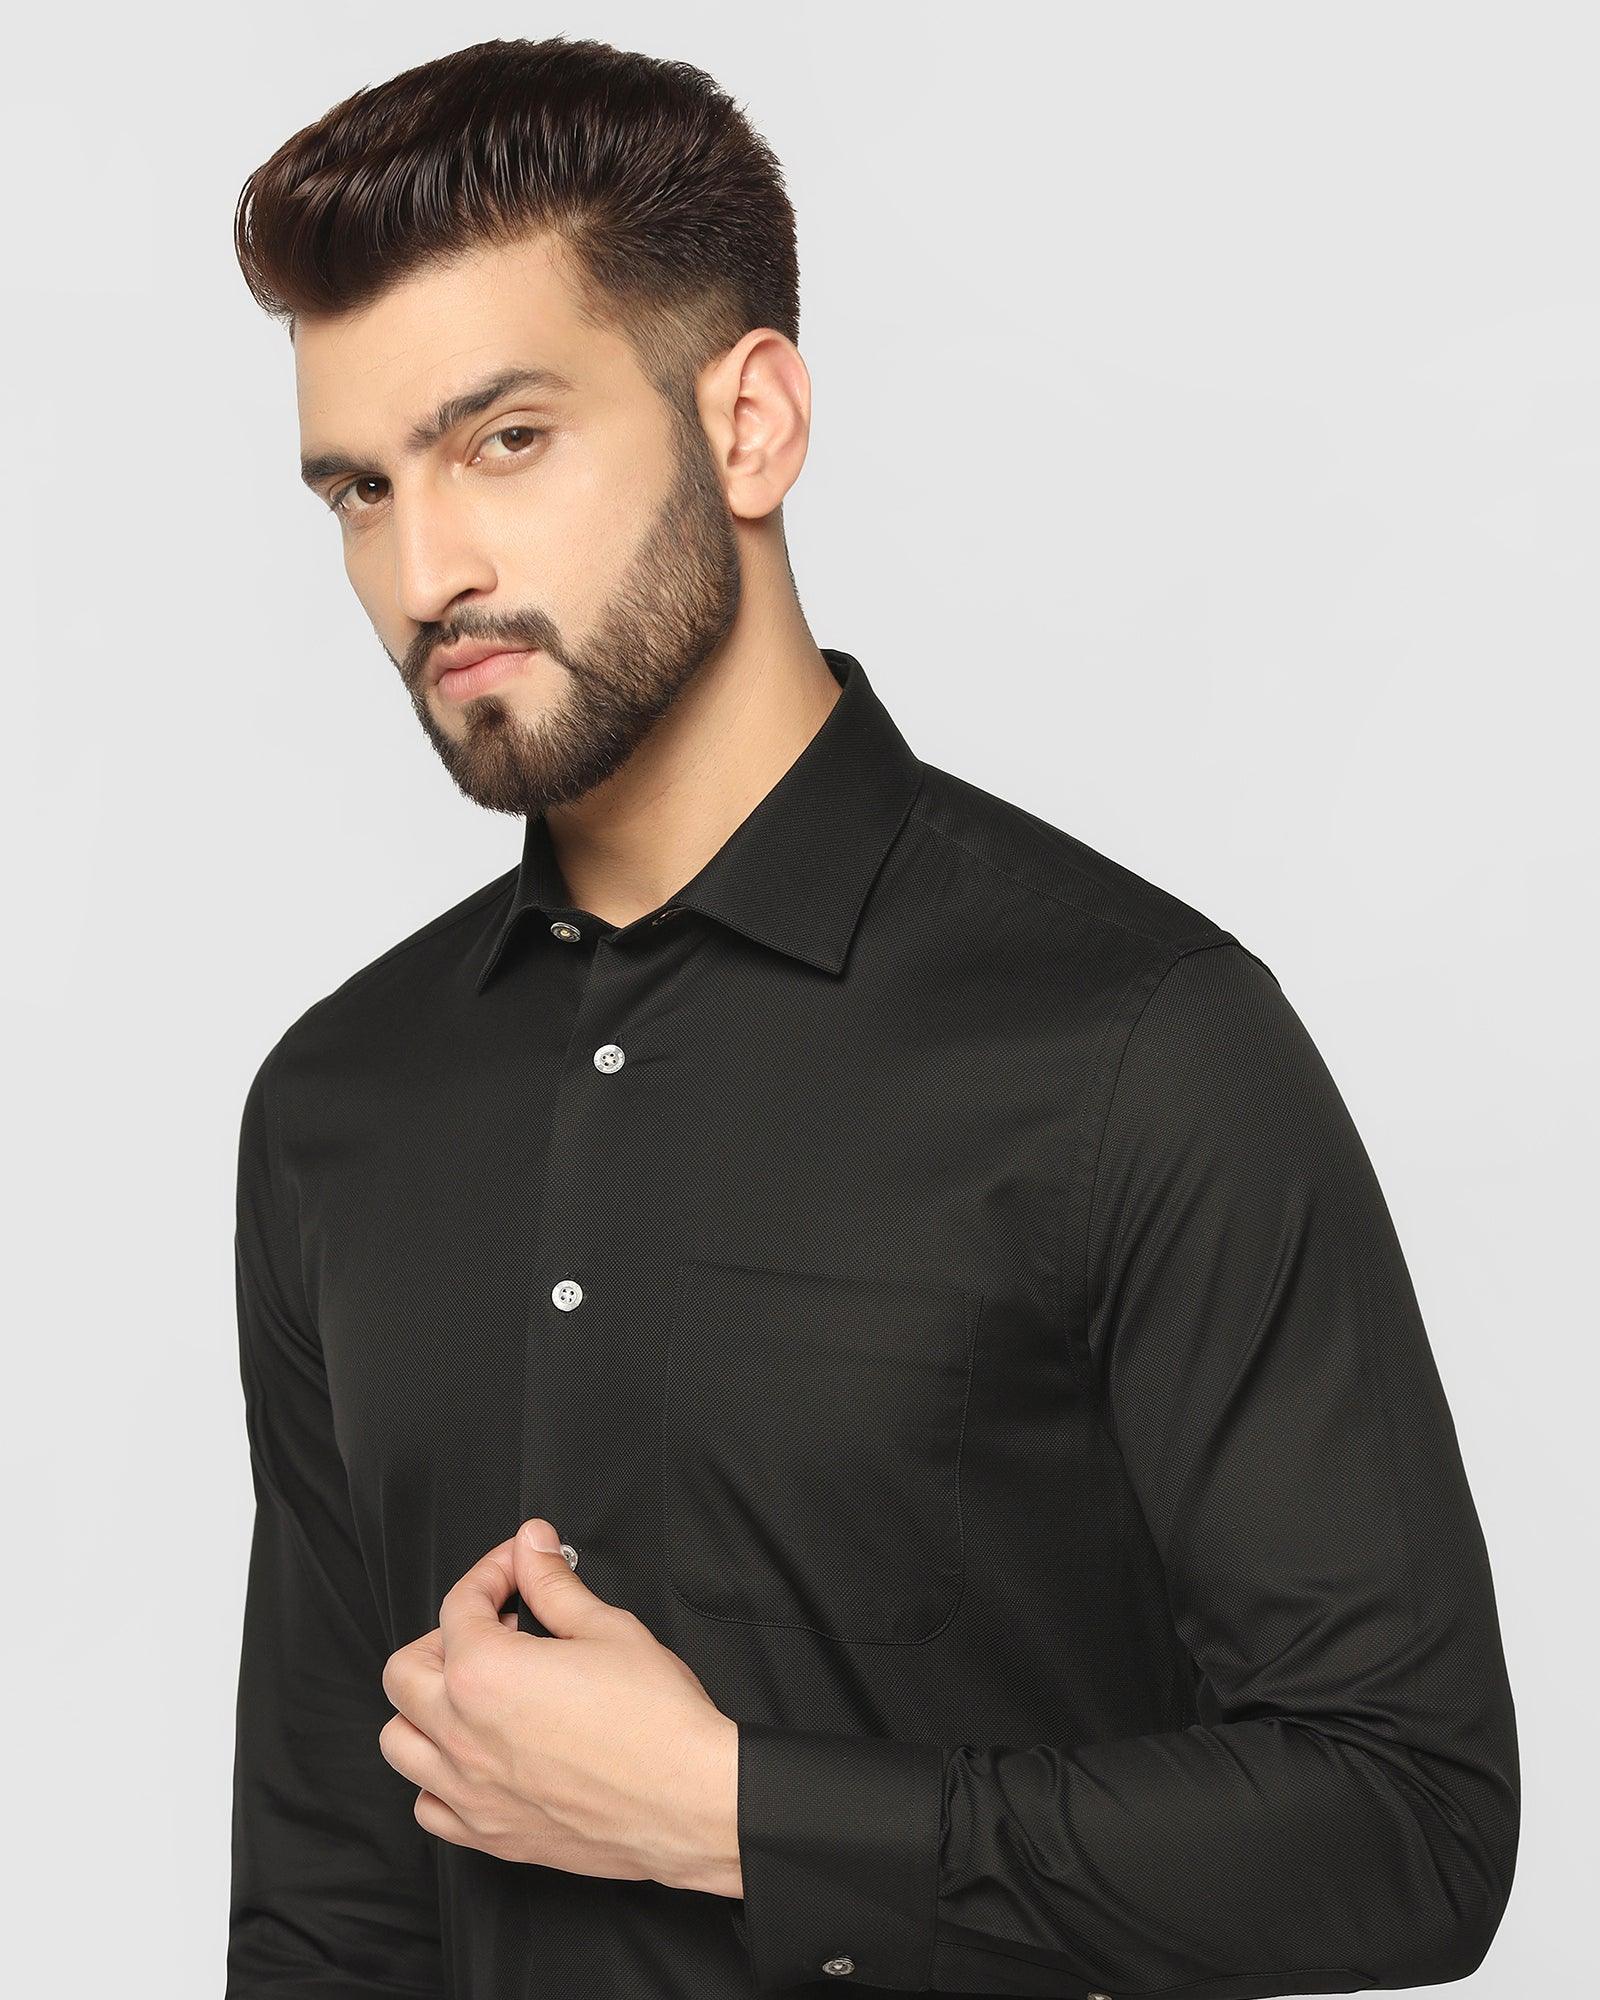 Luxe Formal Black Textured Shirt - Scotch